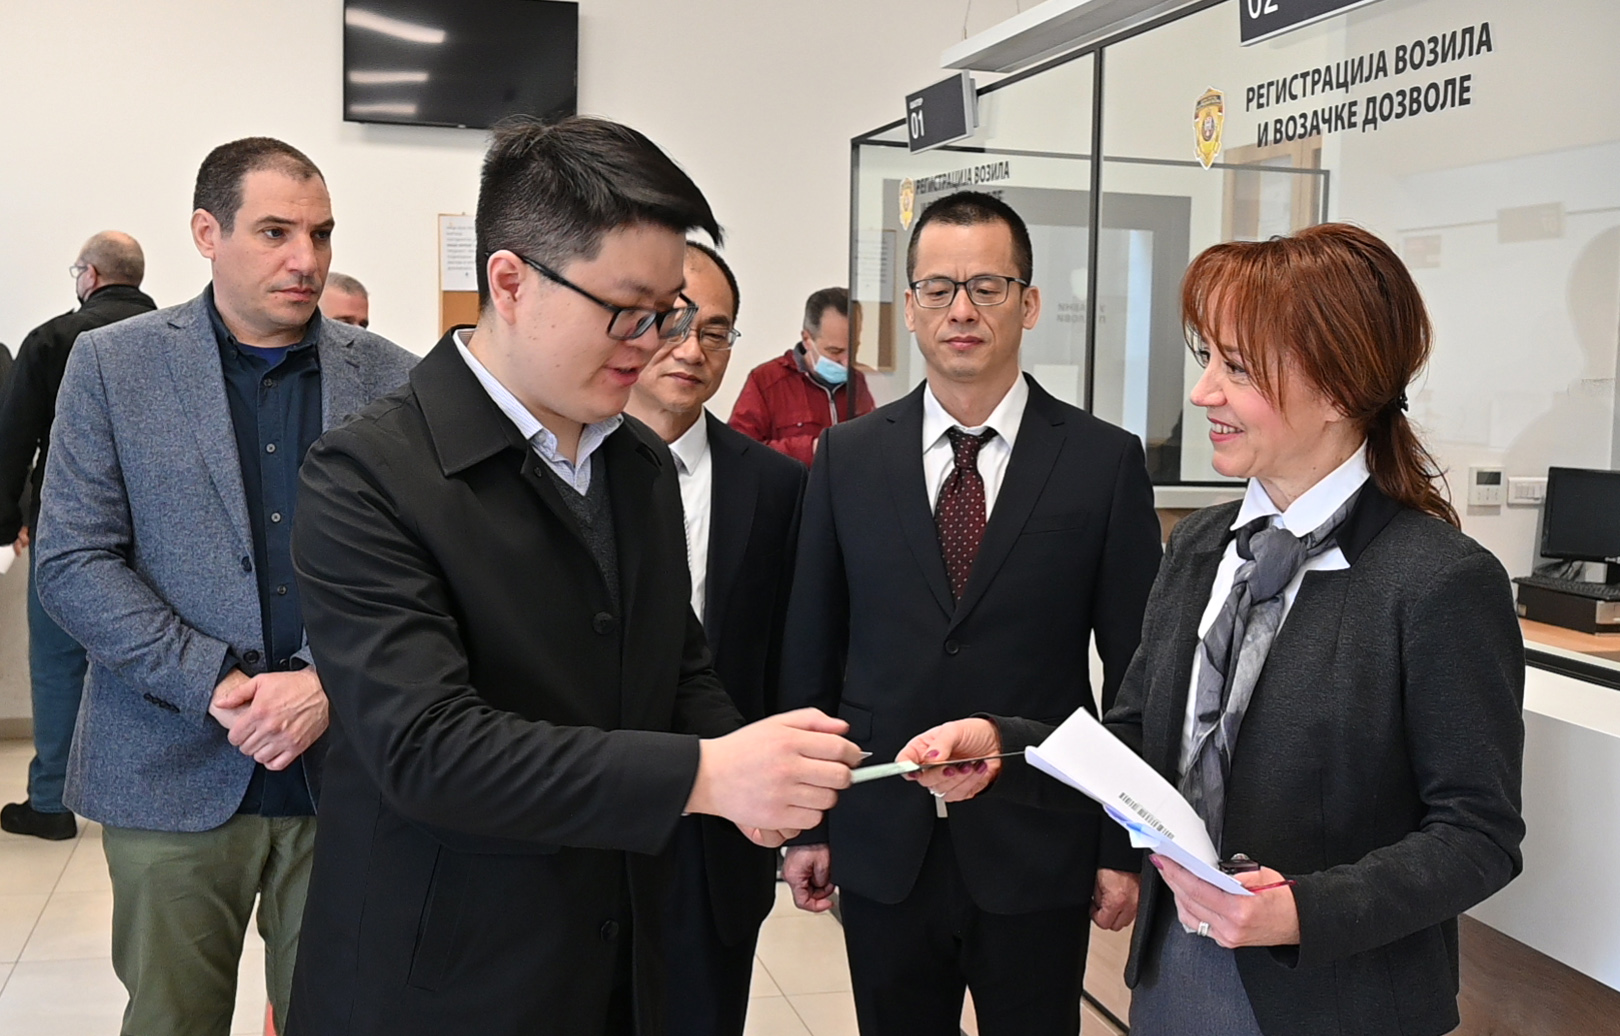 Prva zamena kineske vozačke dozvole za srpsku, po osnovu Sporazuma o međusobnom priznanju i zameni vozačkih dozvola